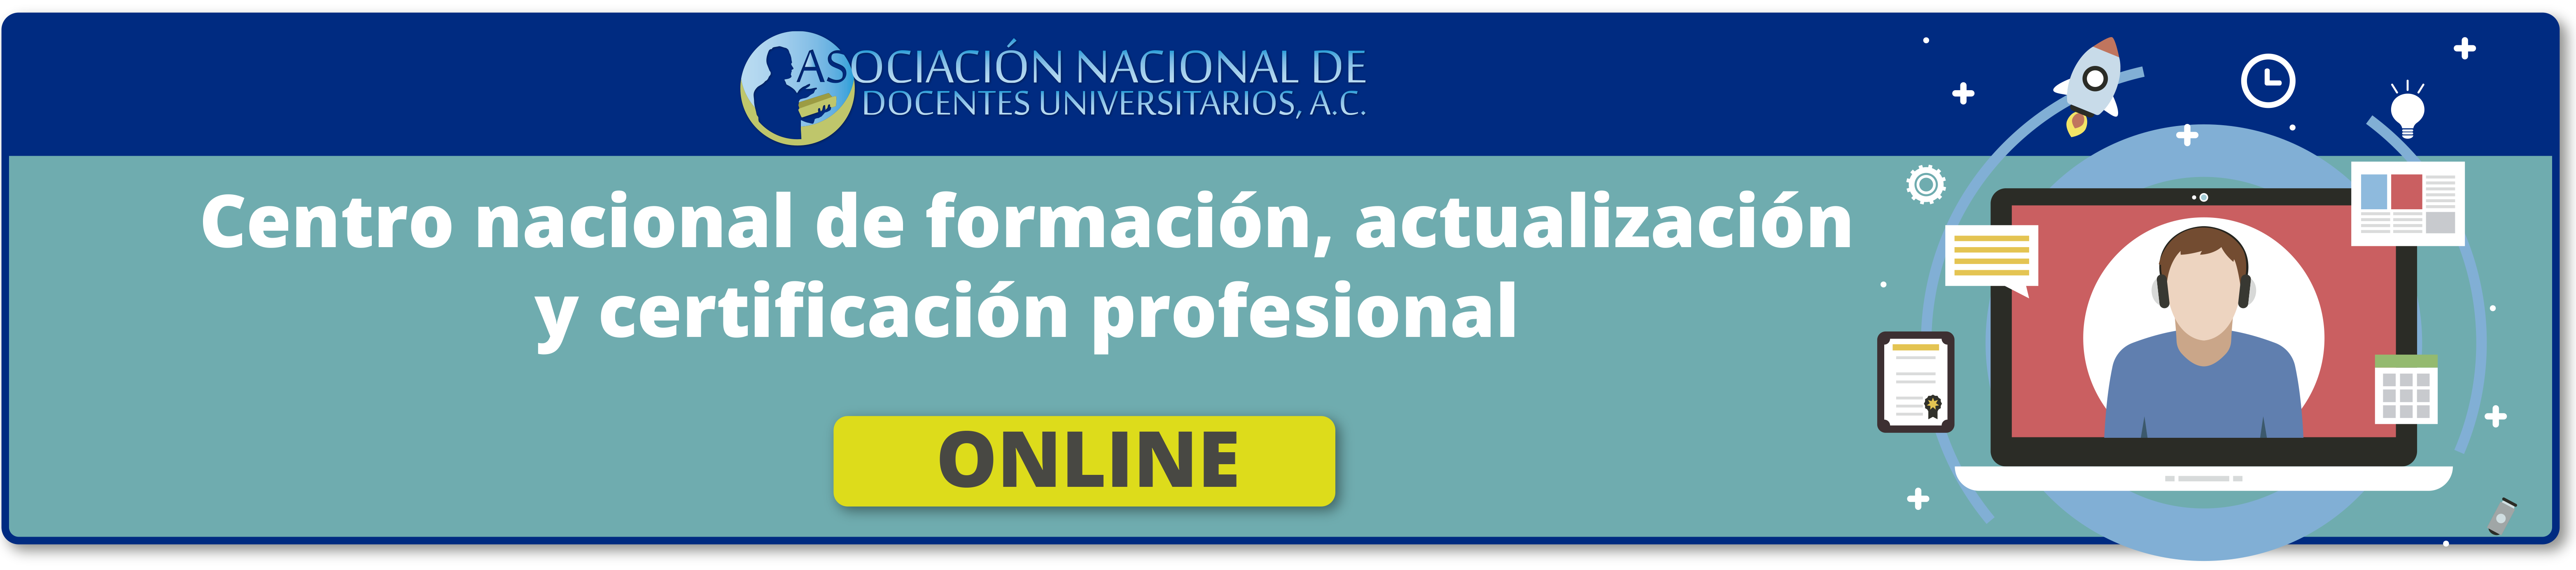 centro_nacional_formacion_certificacion_profesional_online.png